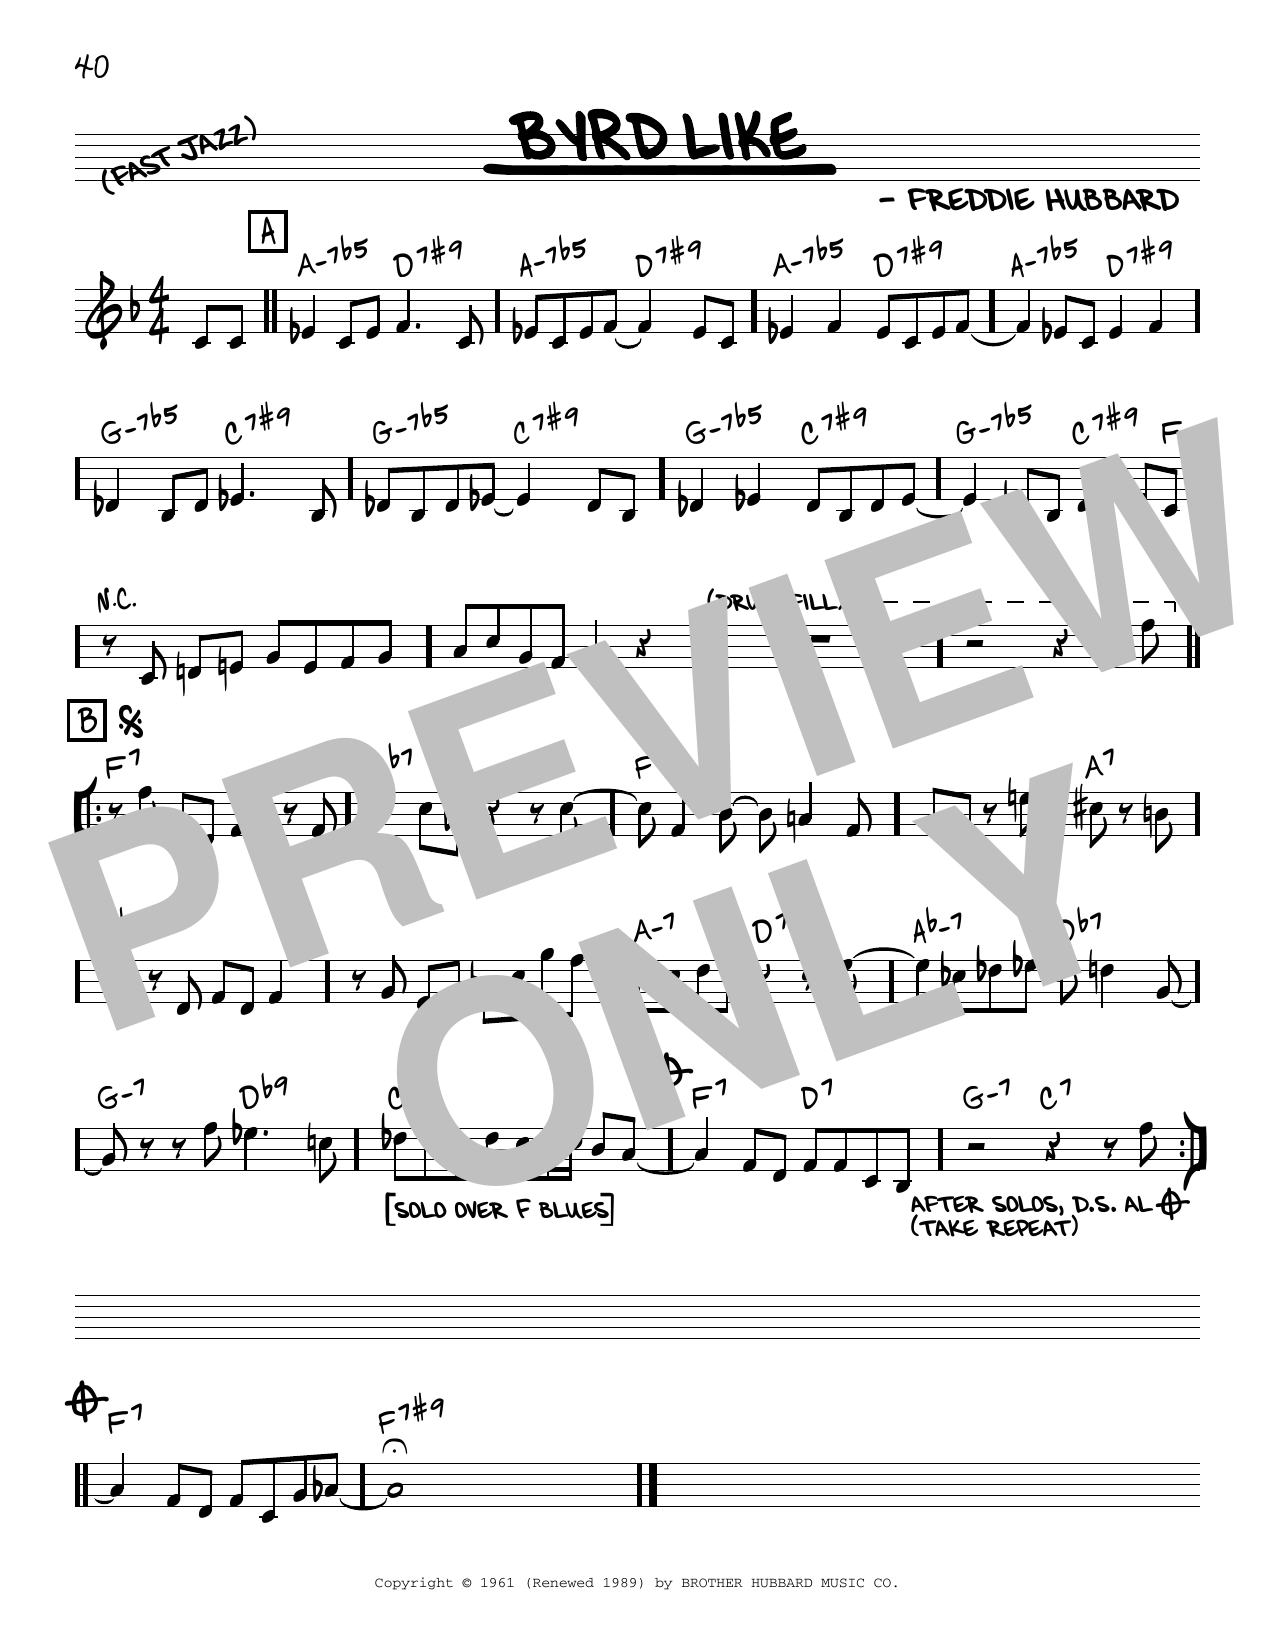 Freddie Hubbard Byrd Like Sheet Music Notes & Chords for Trumpet Transcription - Download or Print PDF